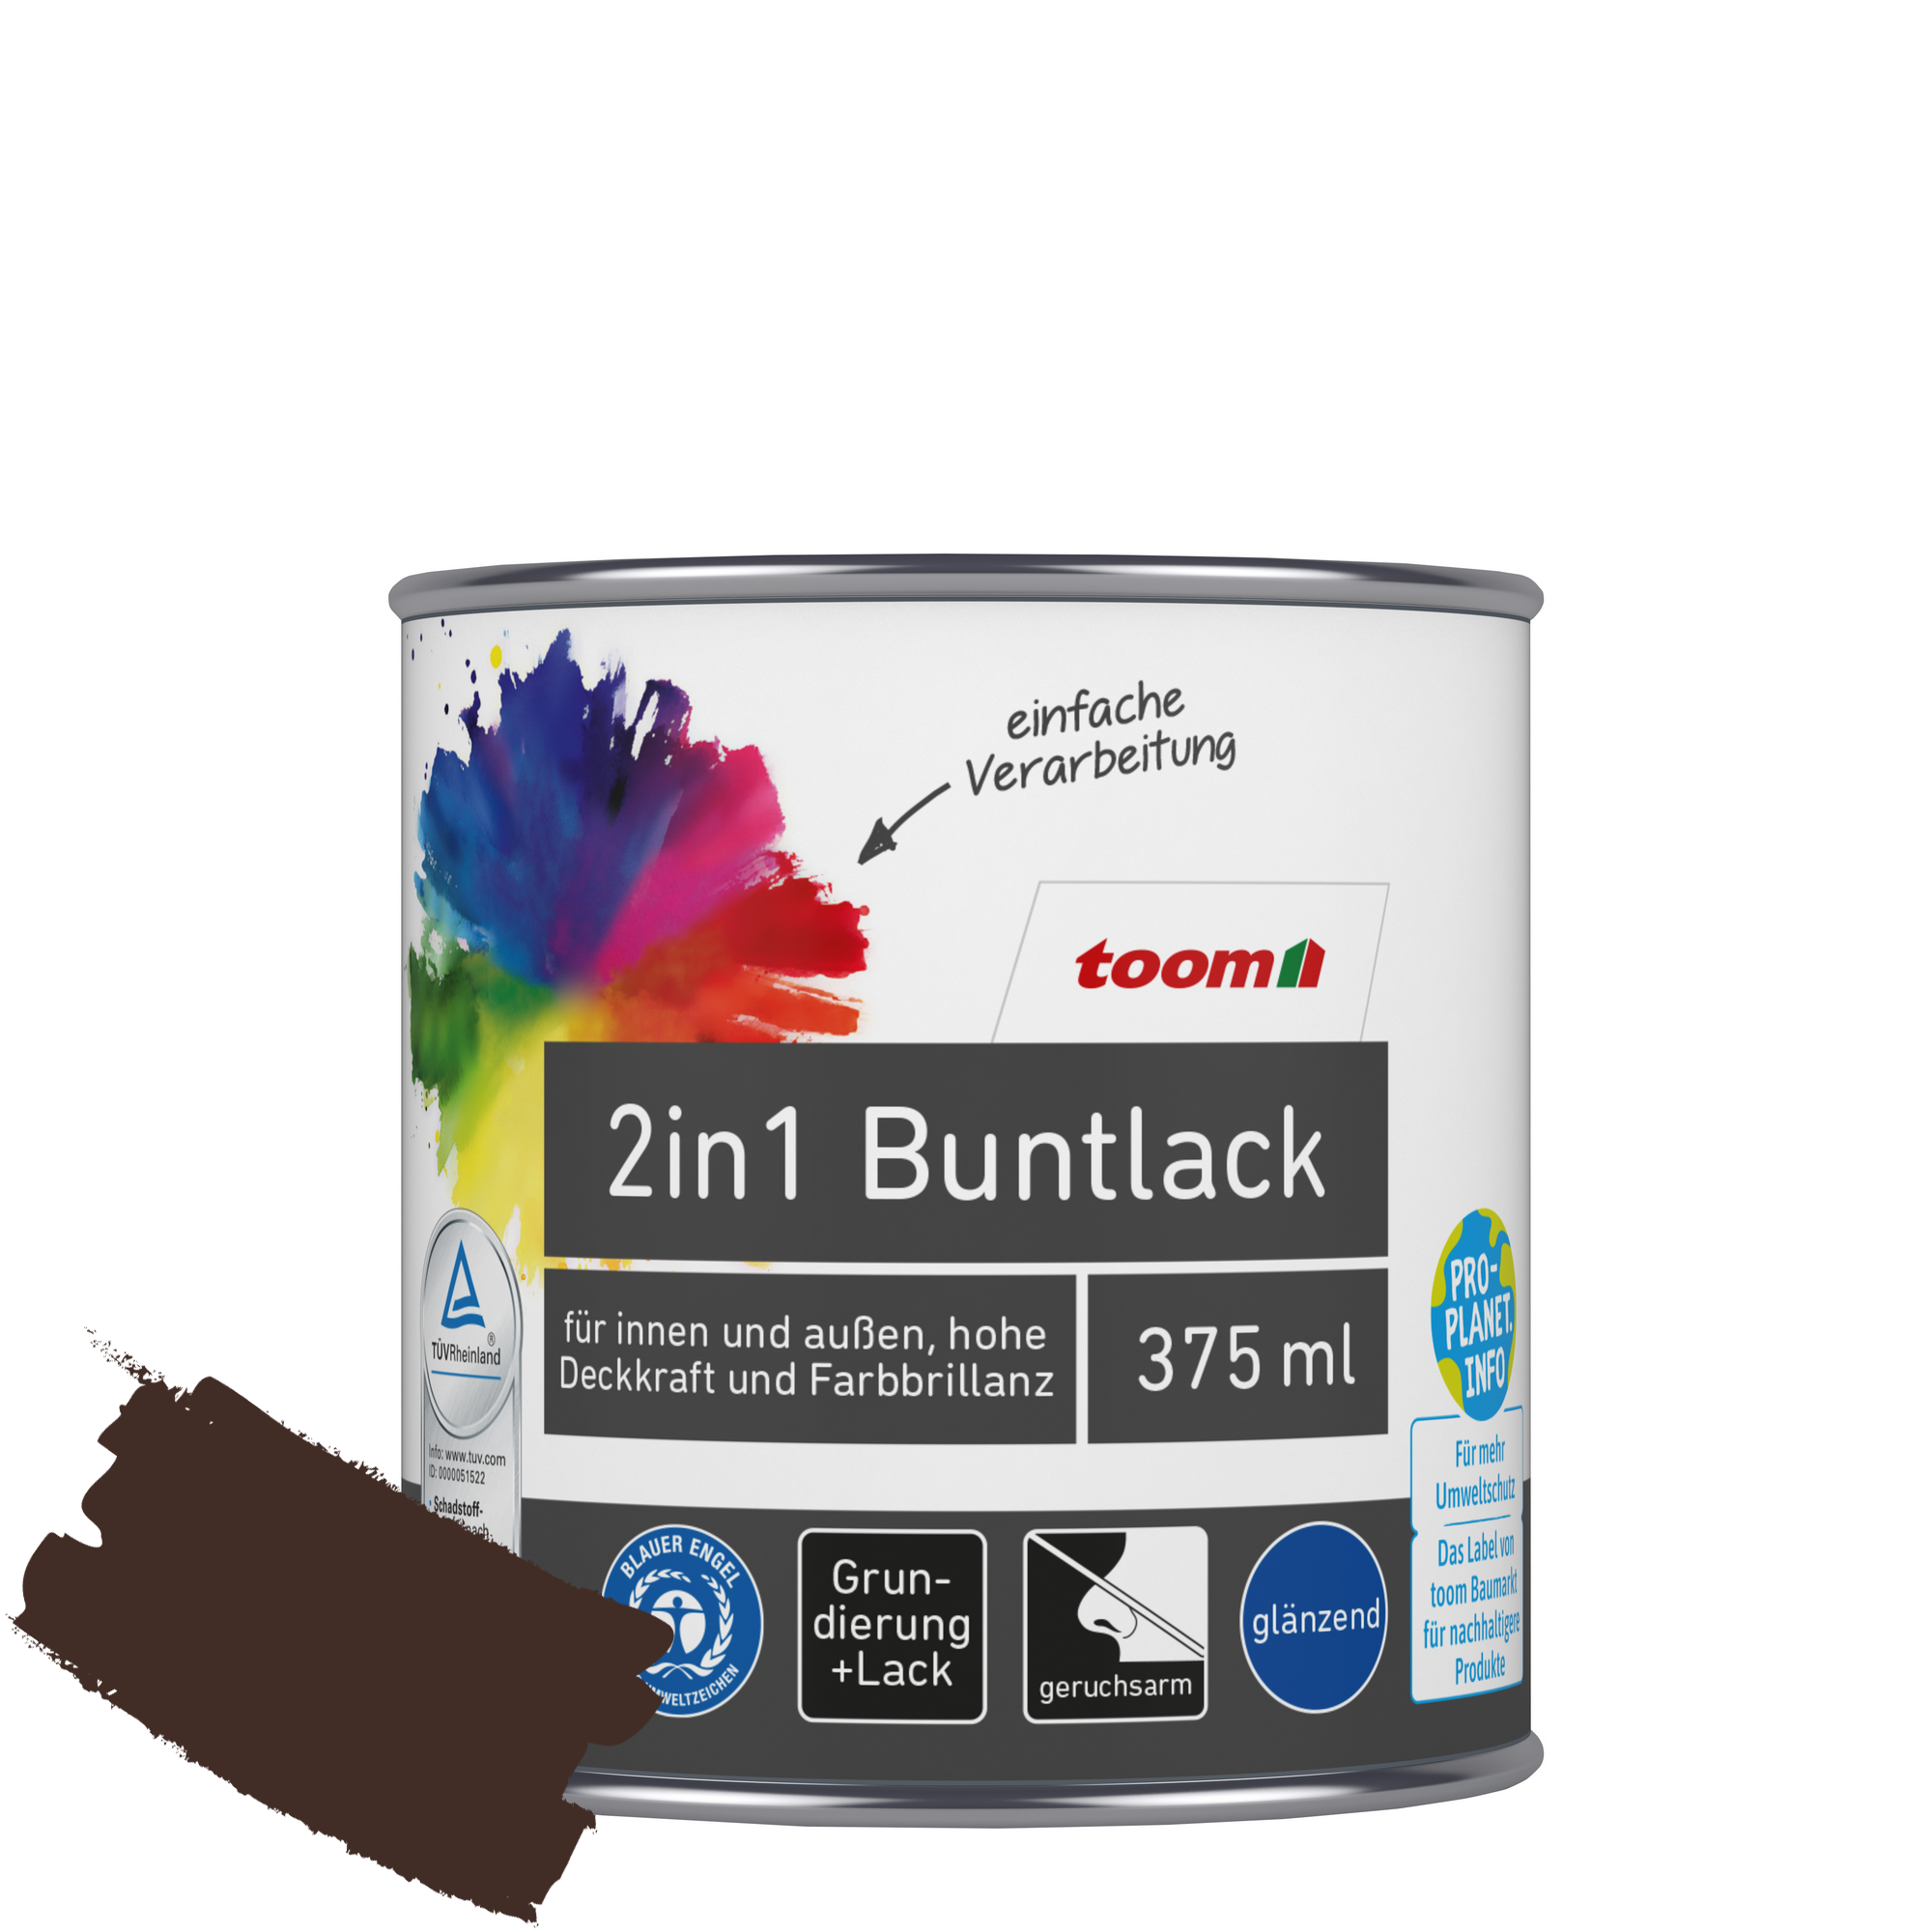 2in1 Buntlack 'Edelbraun' schokobraun glänzend 375 ml + product picture